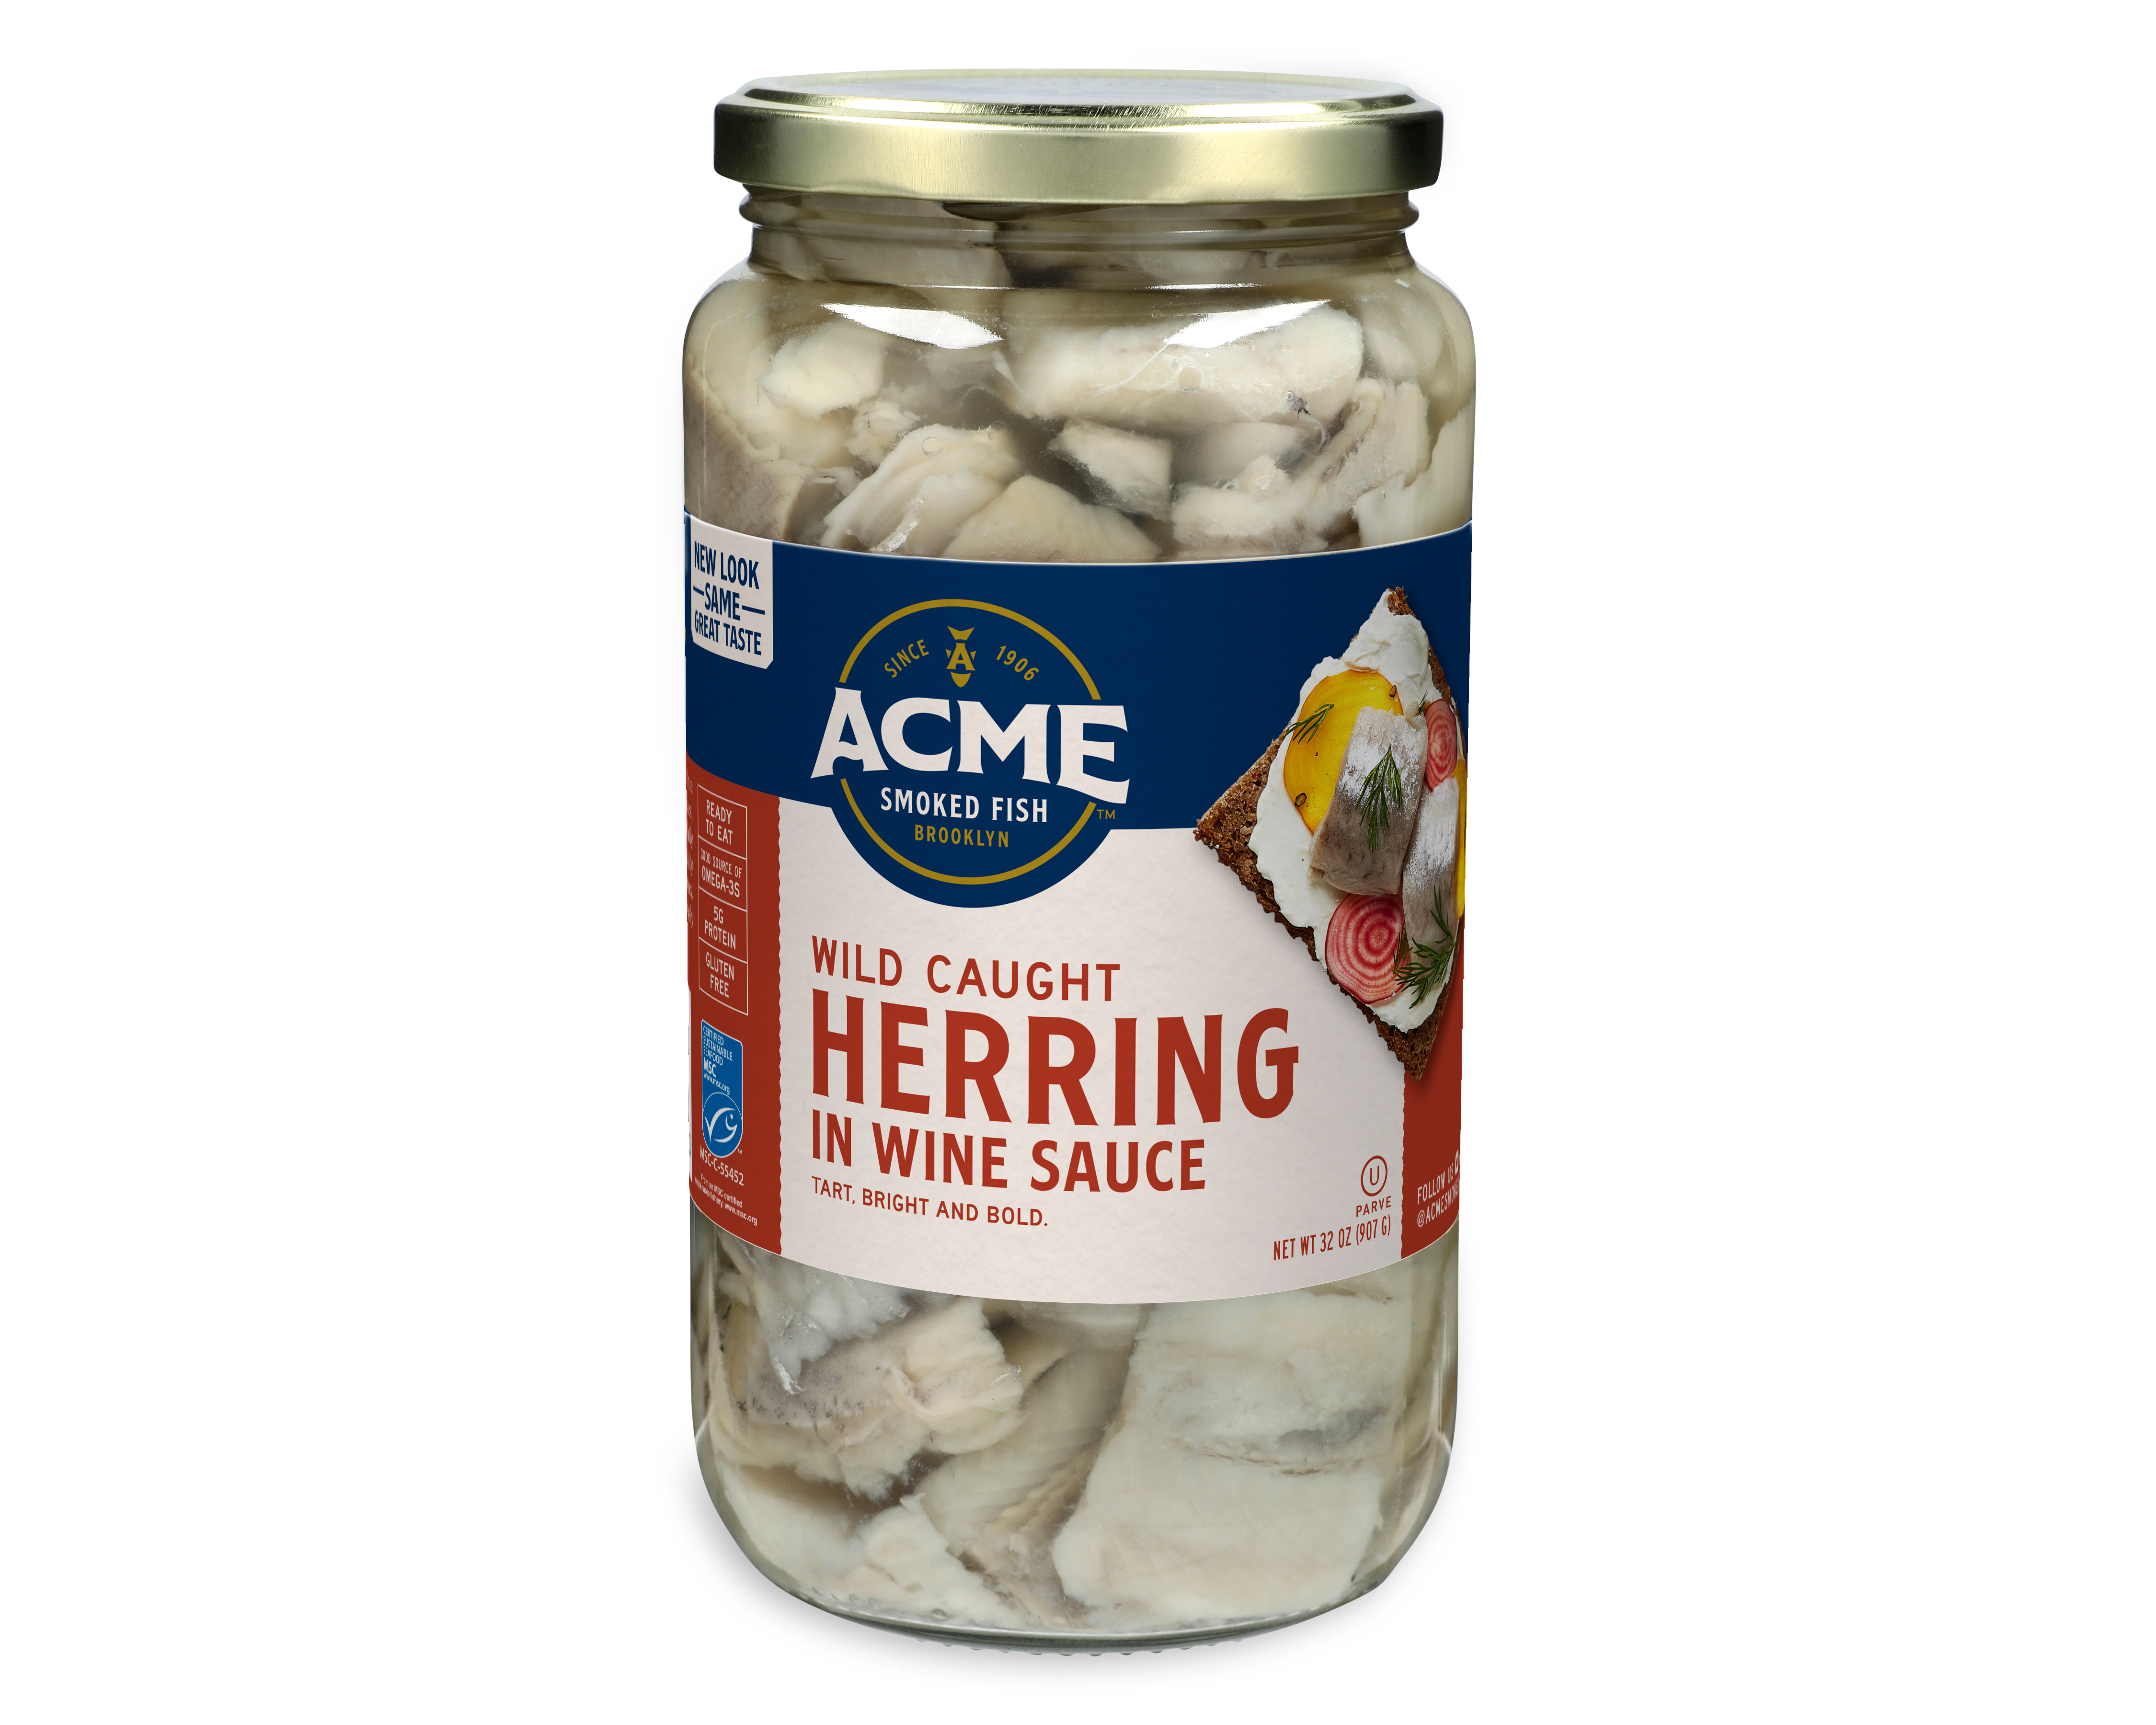 Acme Smoked Fish pickled herring in wine